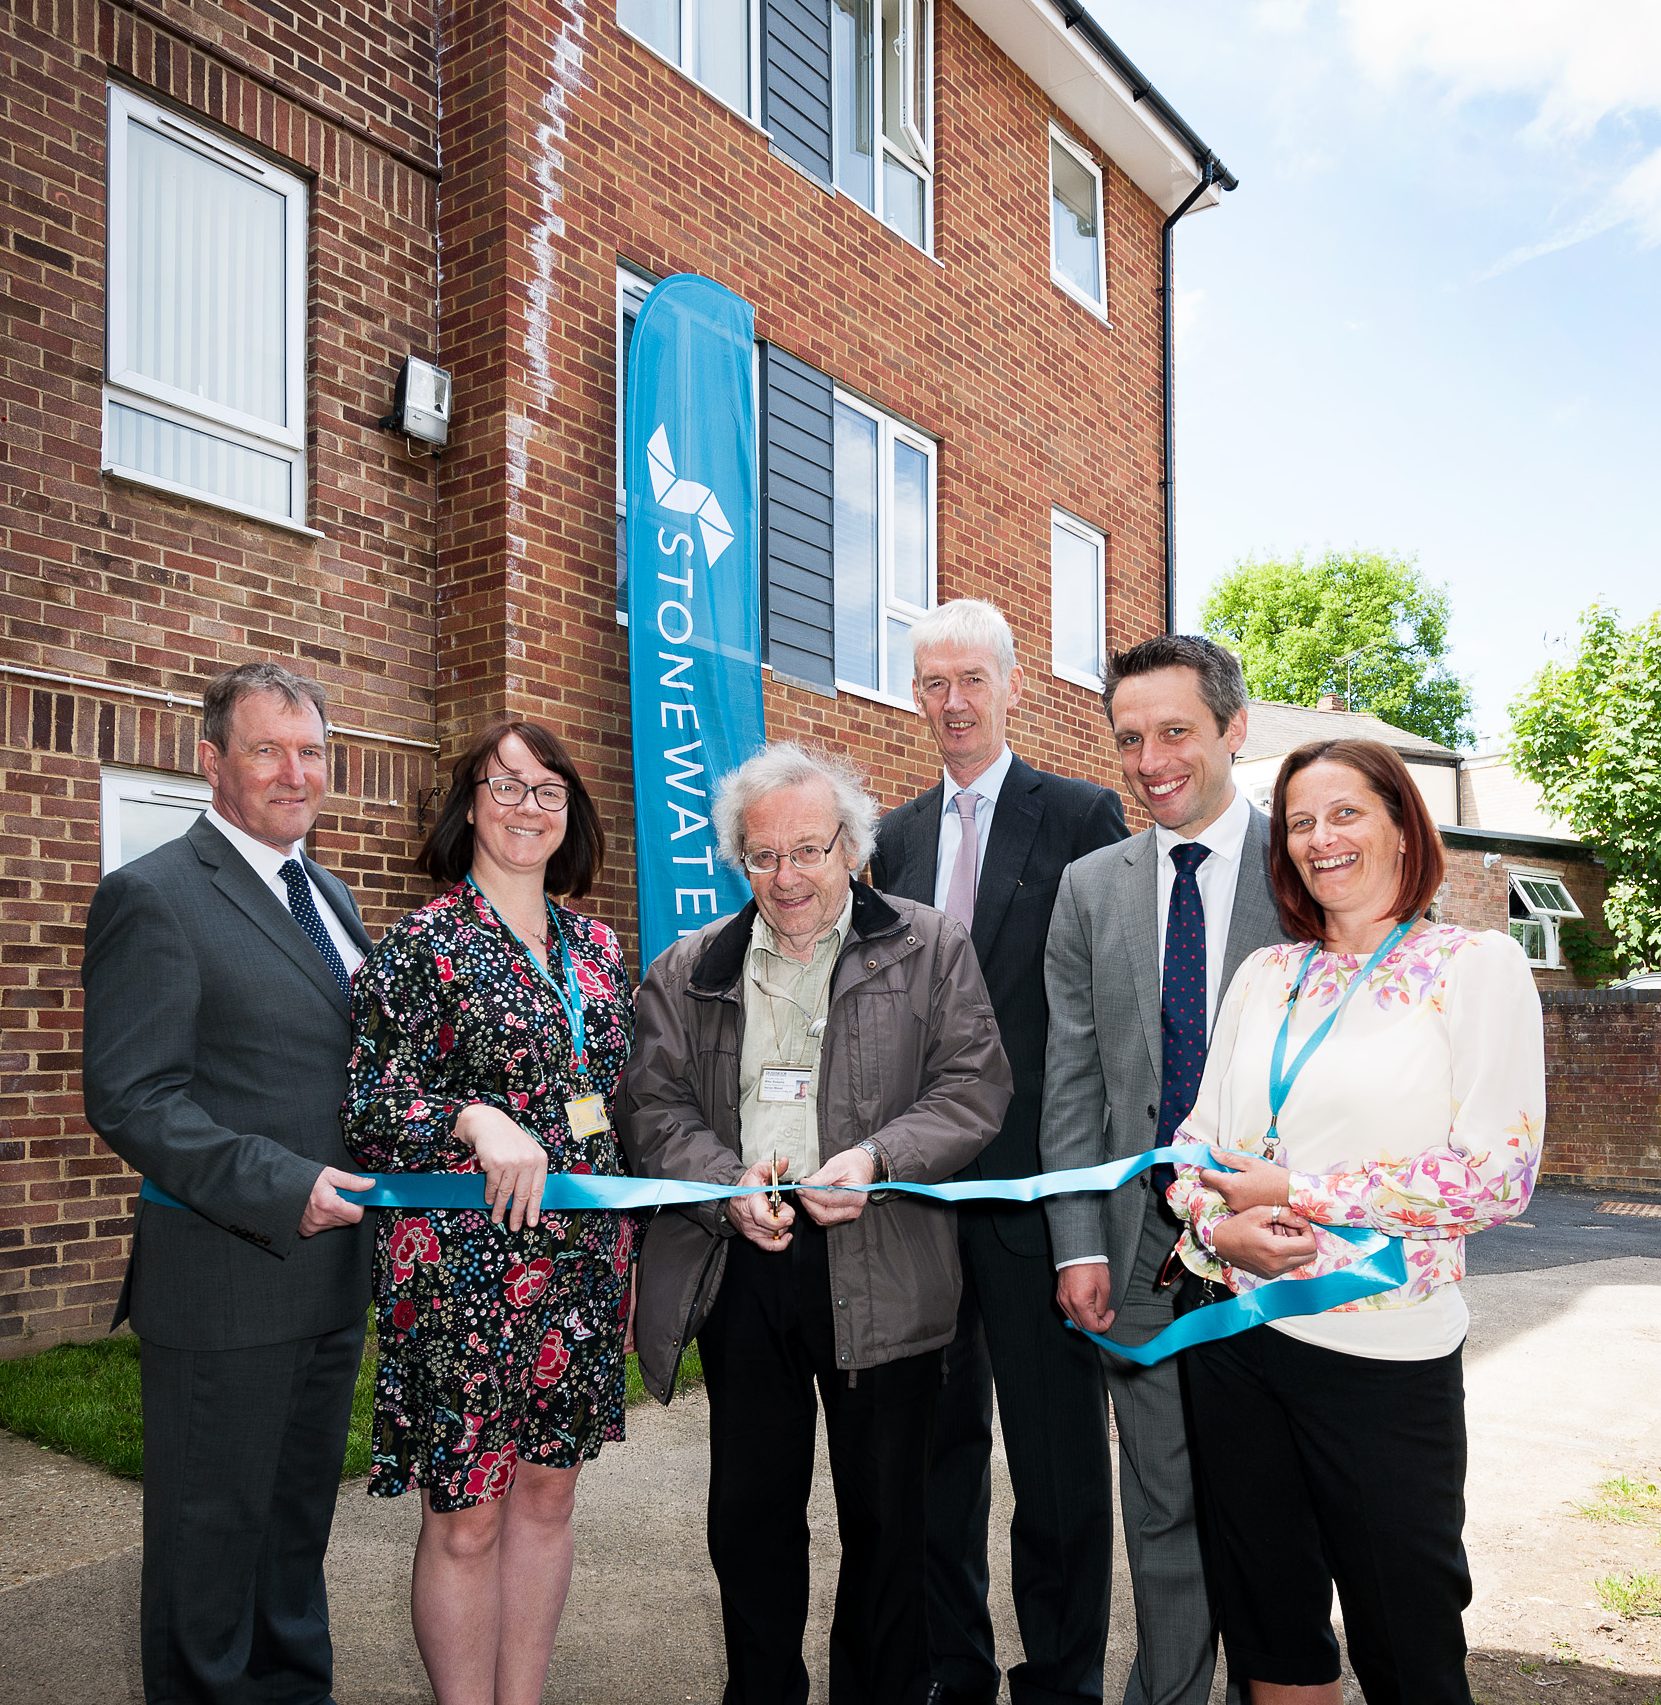 New Stonewater development of low-cost rental homes in Aldershot